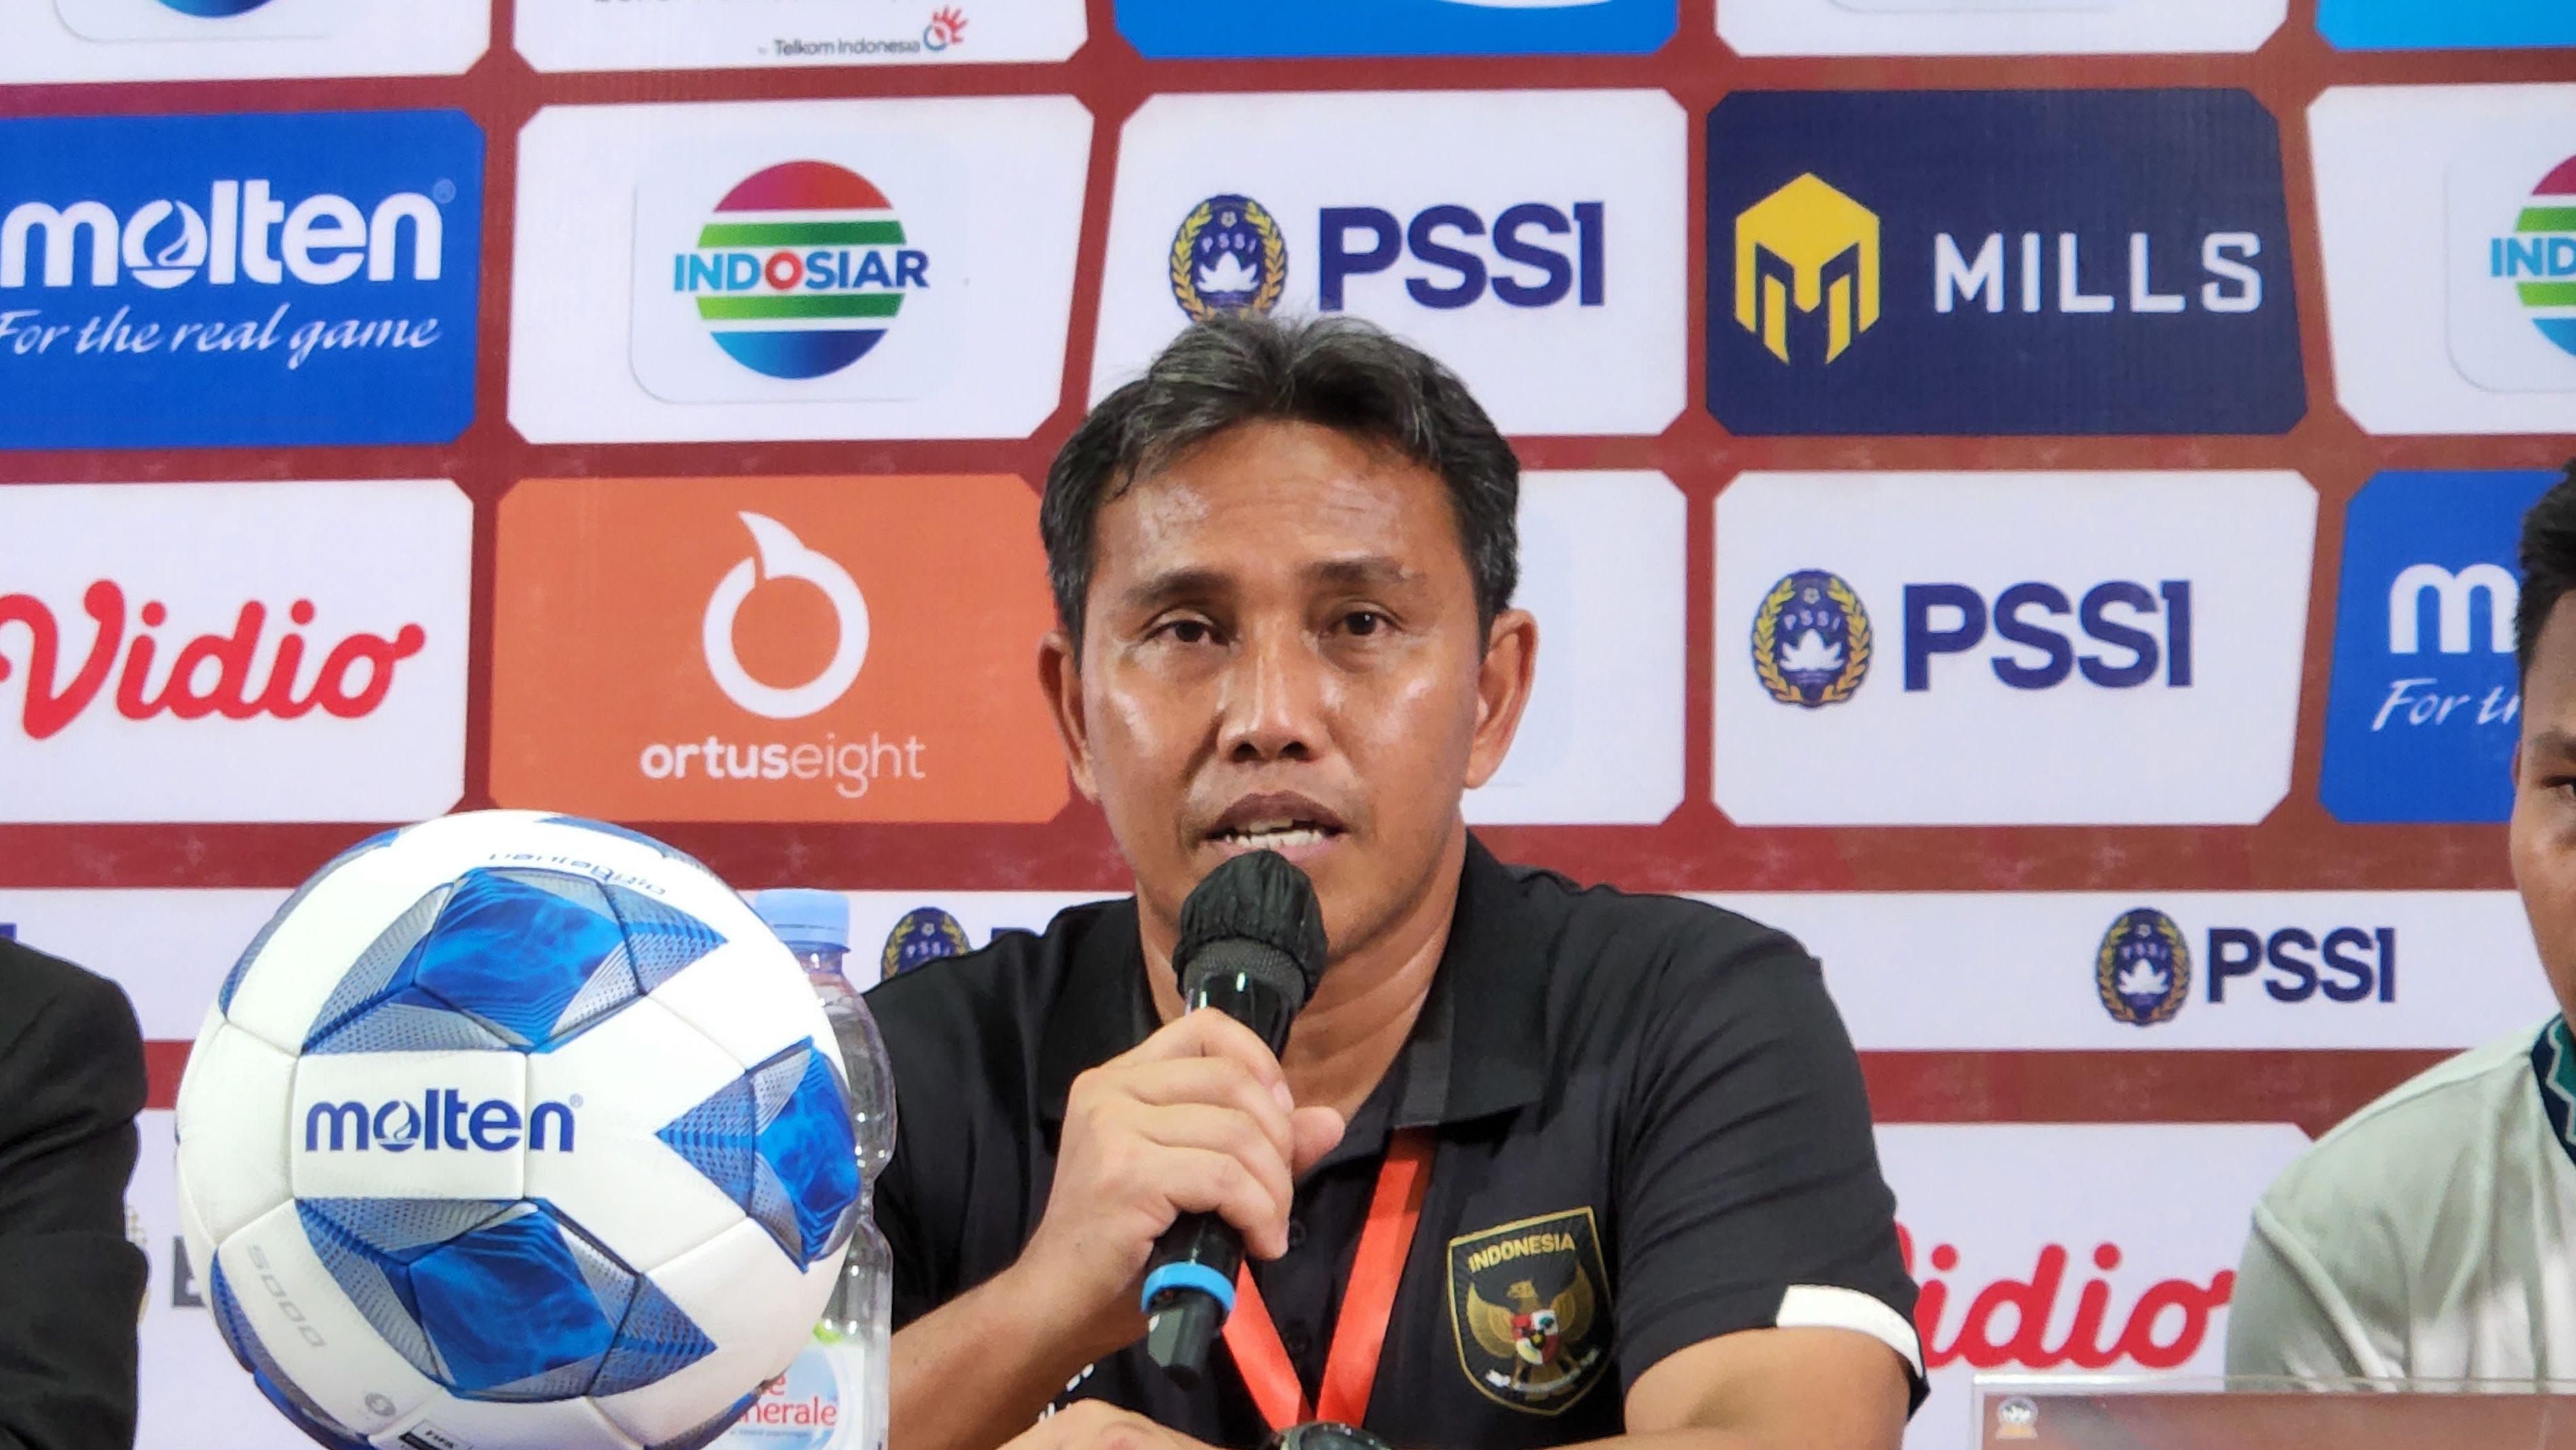 Pelatih timnas U-16 Indonesia, Bima Sakti, saat memberikan keterangan pada sesi konferensi pers seusai pertandingan lanjutan Grup A Piala AFF U-16 2022 kontra Filipina di Stadion Maguwoharjo, Sleman, 3 Agustus 2022.